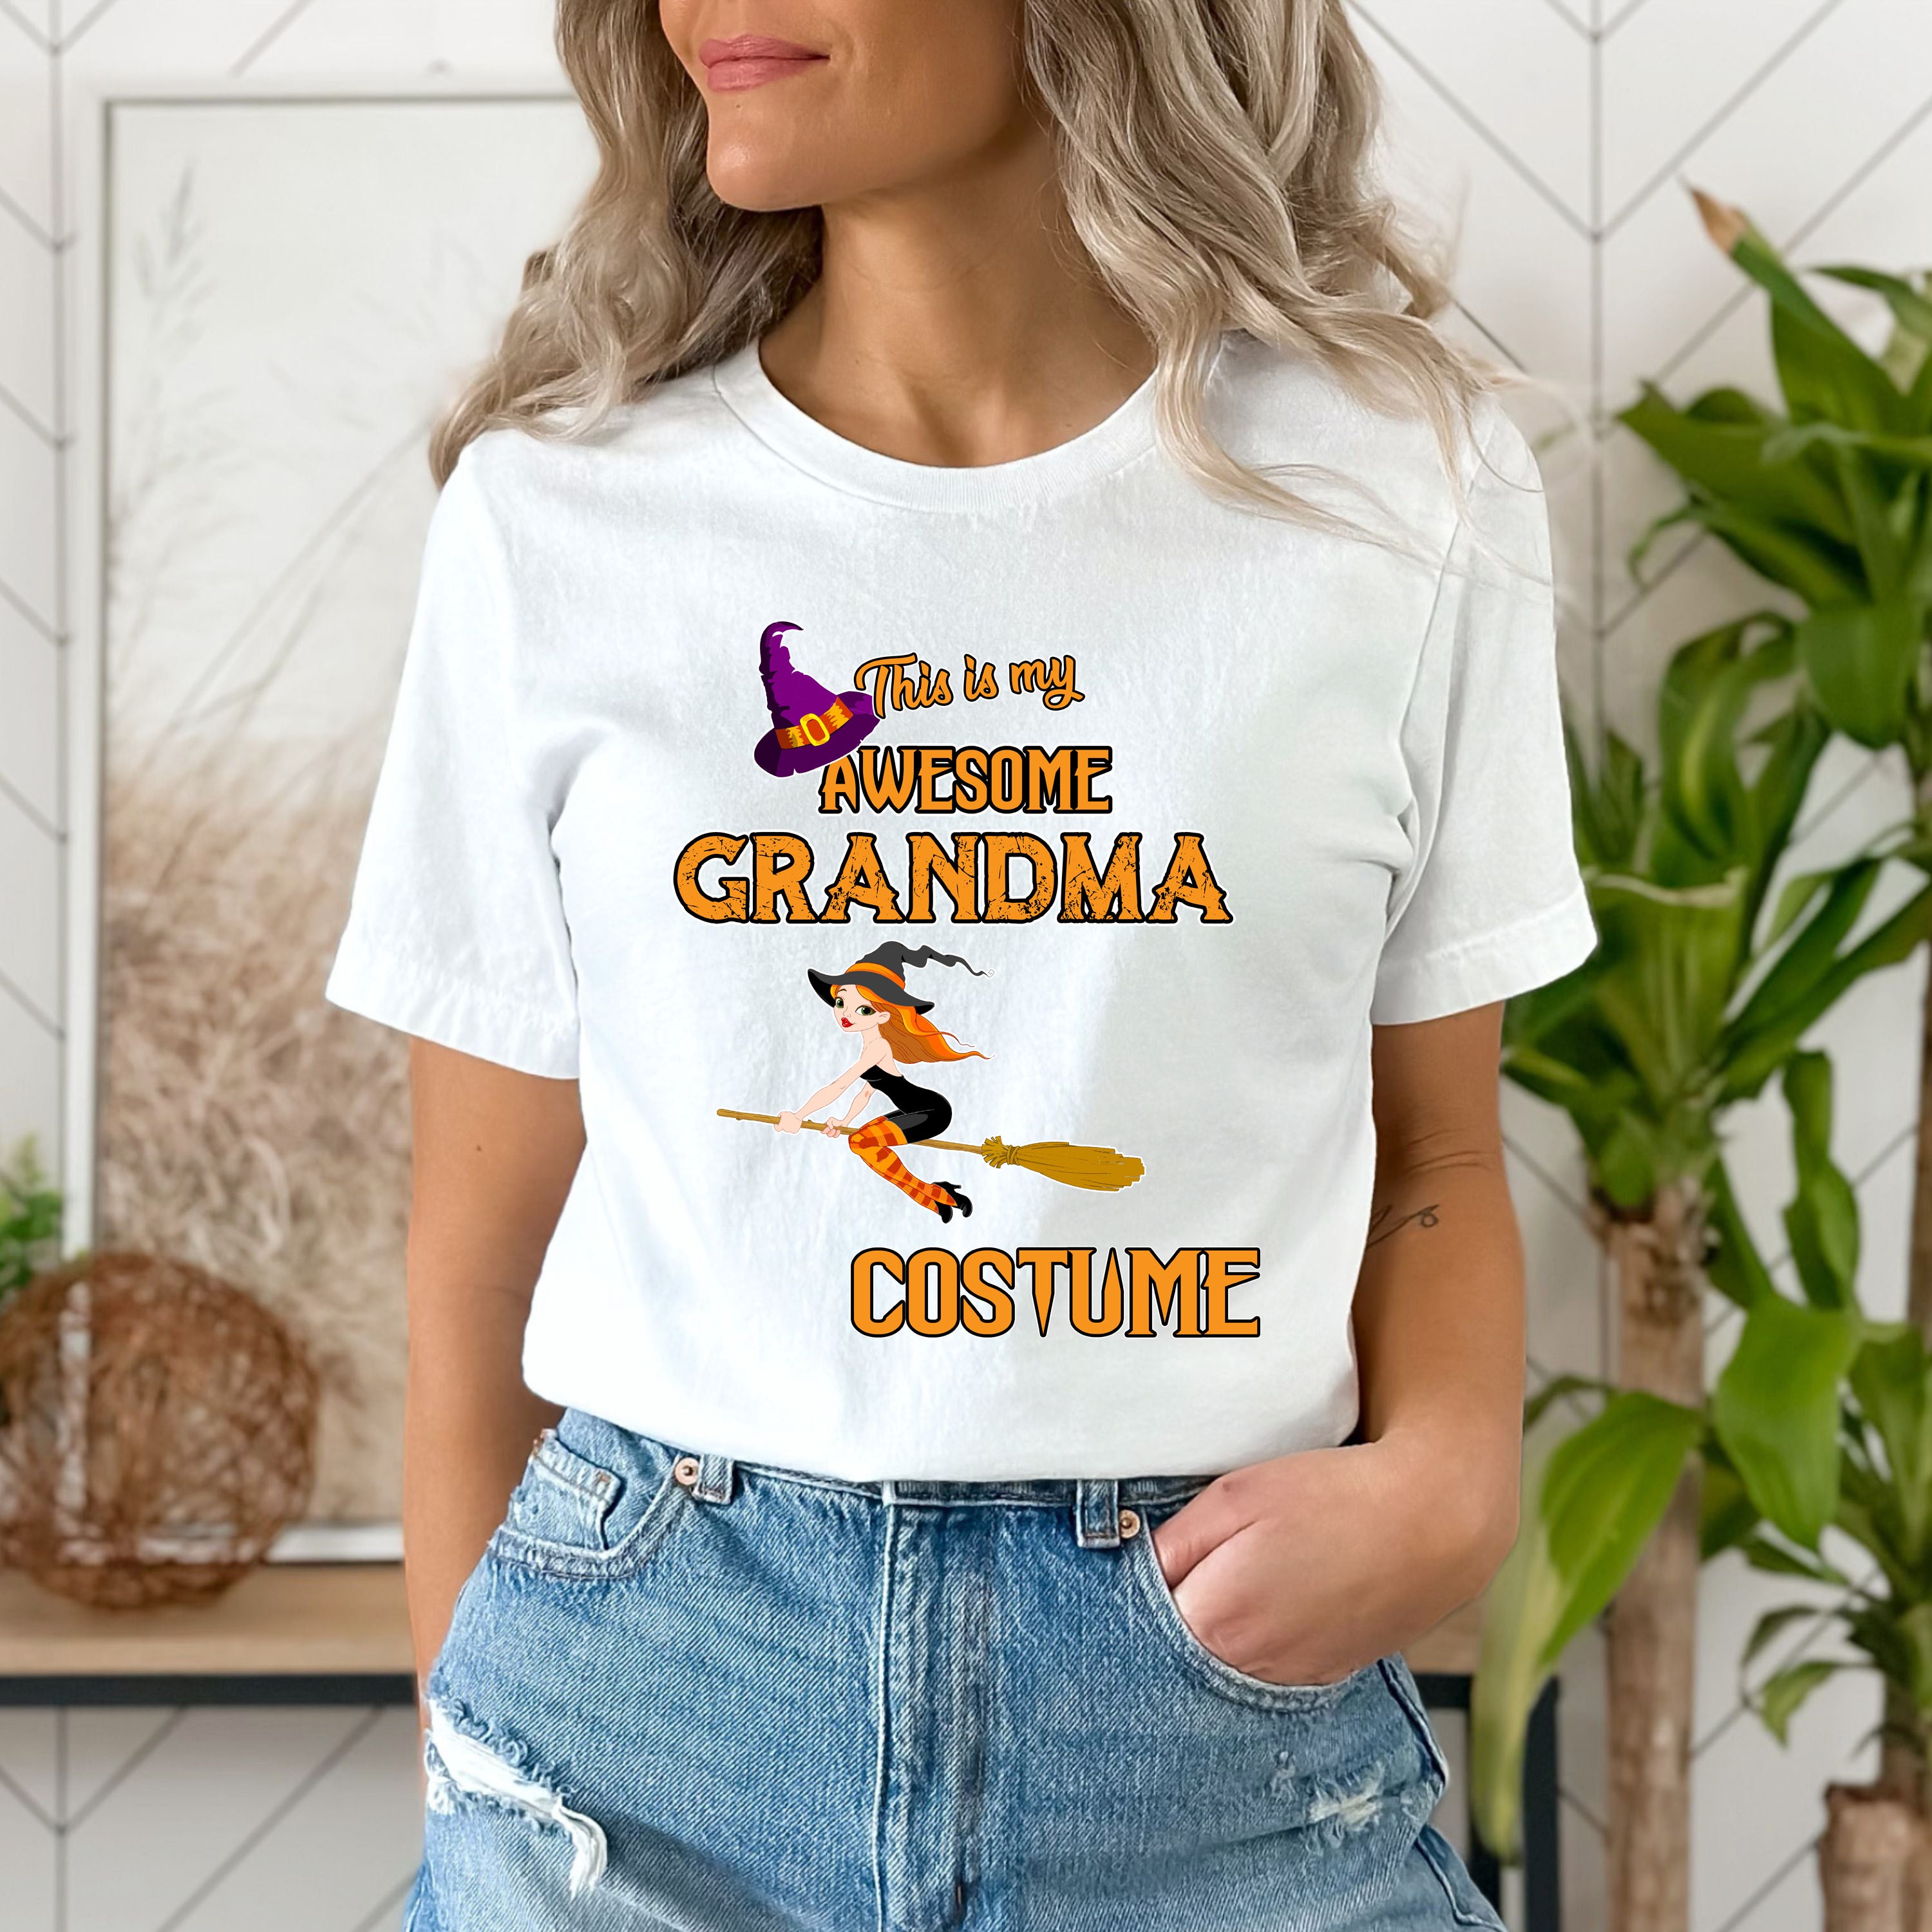 "Awesome Grandma Costume"